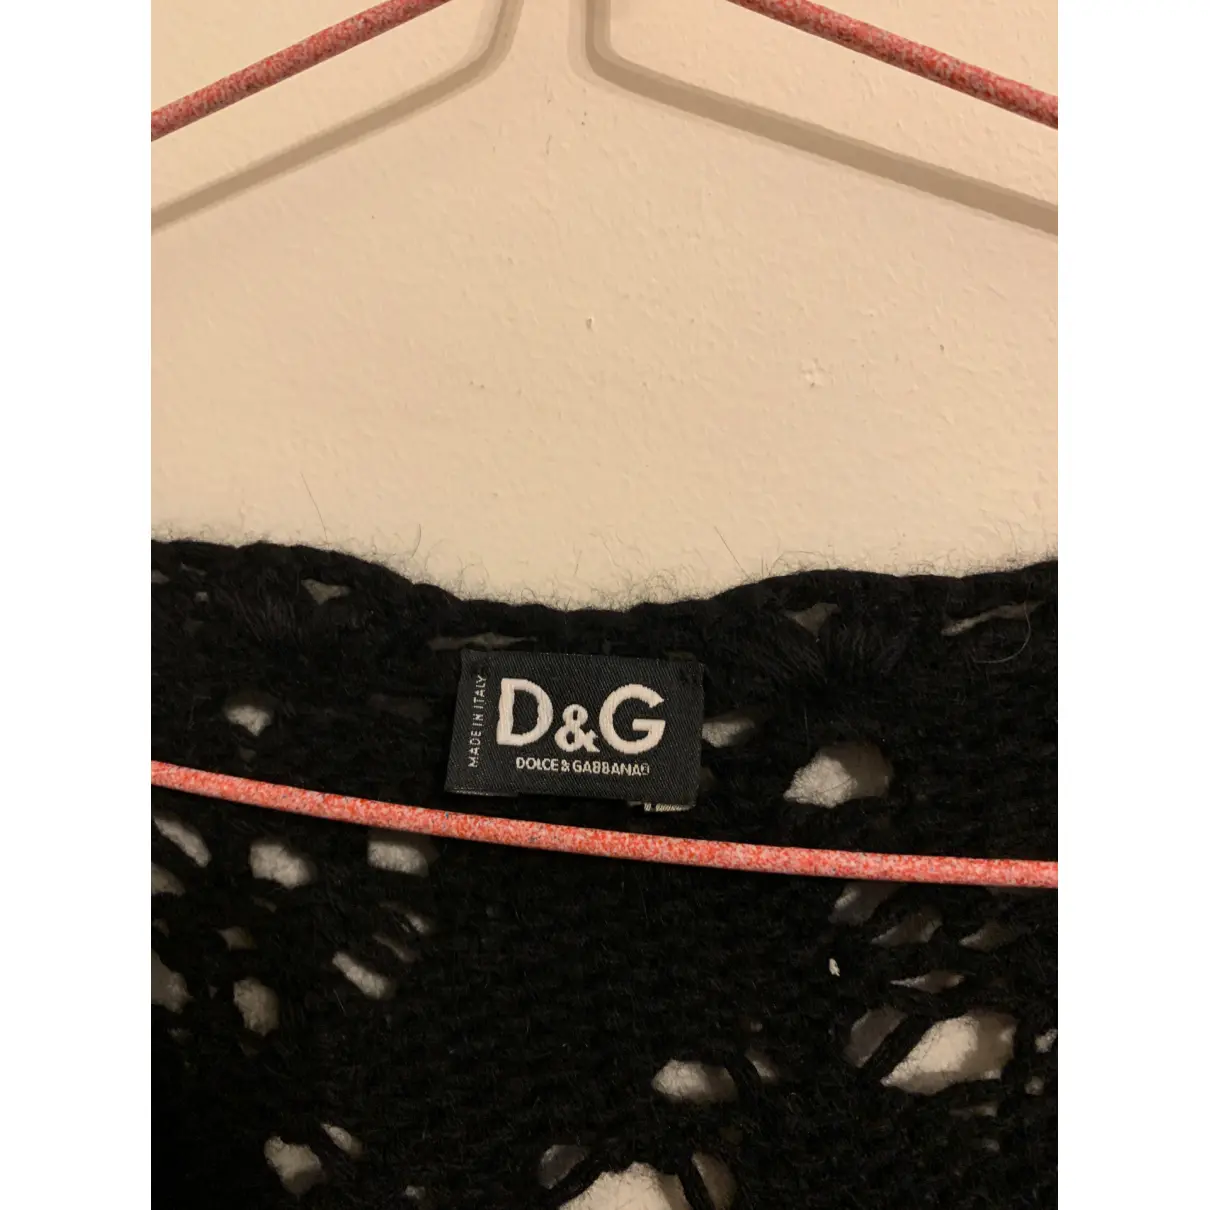 Buy D&G Wool jumper online